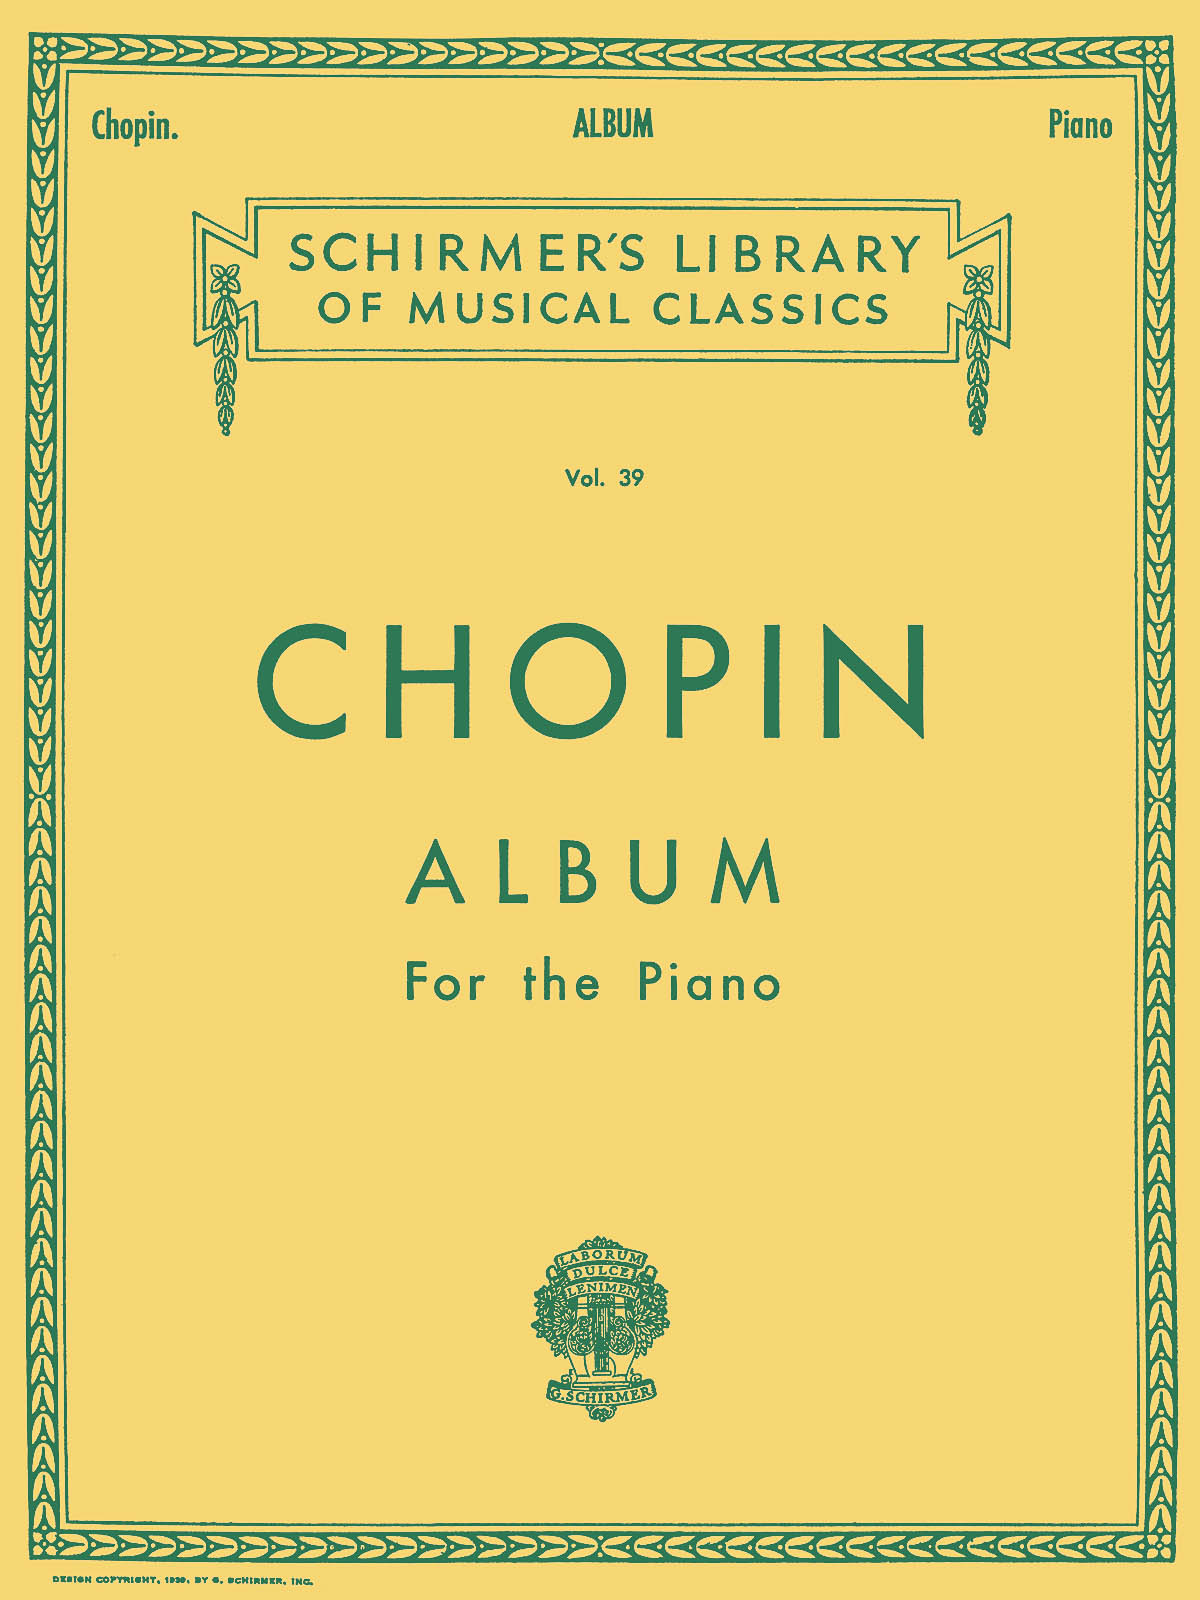 Chopin: Album For The Piano